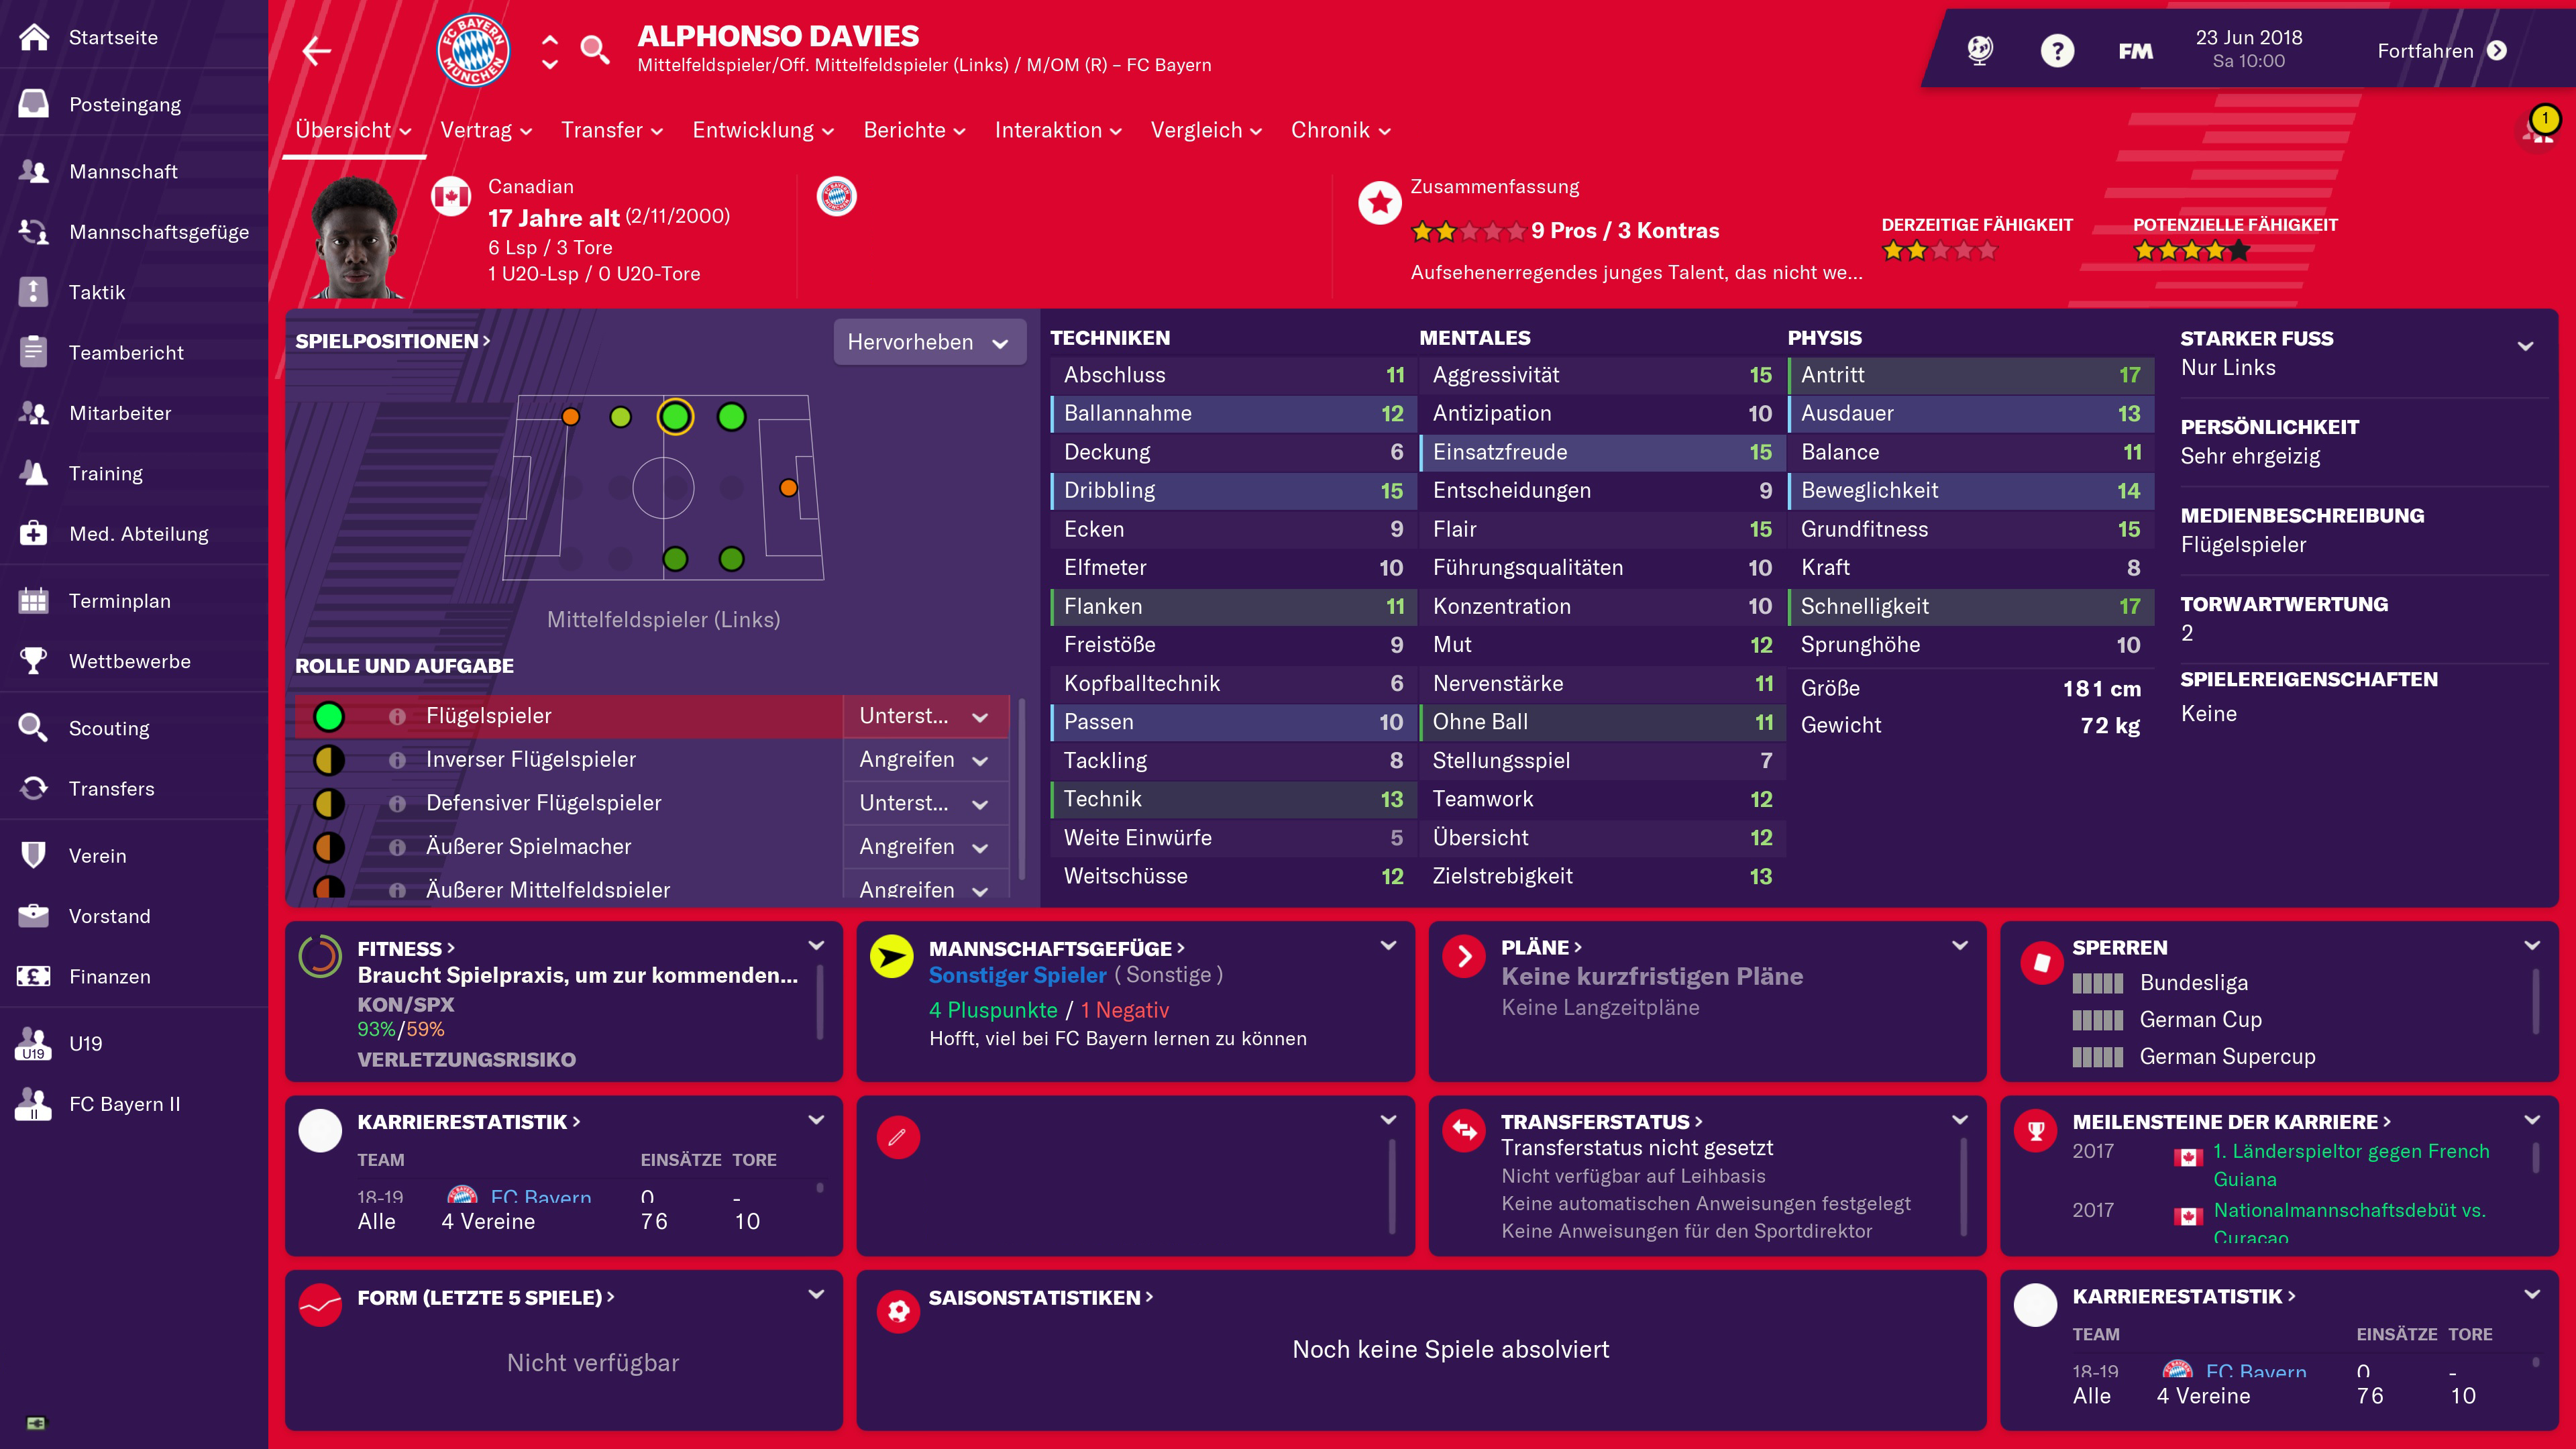 Alphonso Davies Player Profile